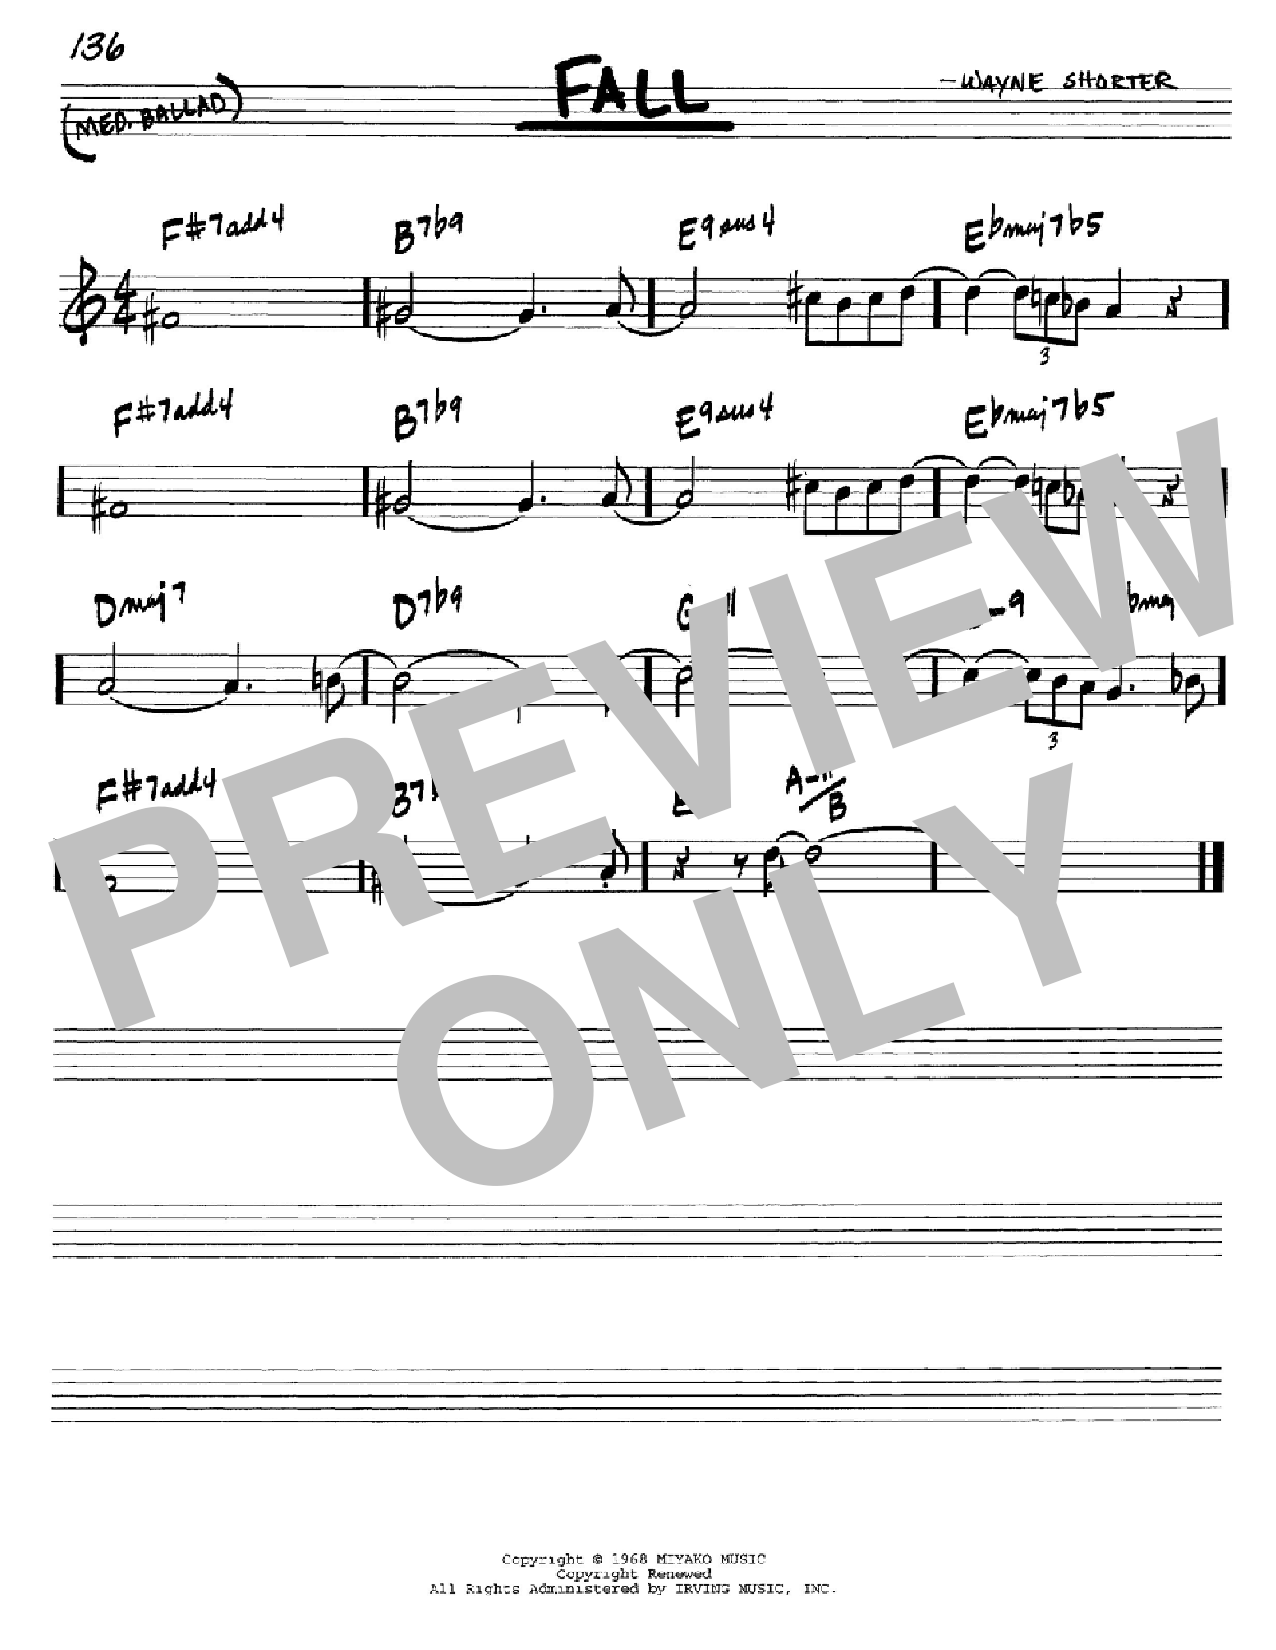 Wayne Shorter Fall Sheet Music Notes & Chords for Real Book - Melody & Chords - Eb Instruments - Download or Print PDF